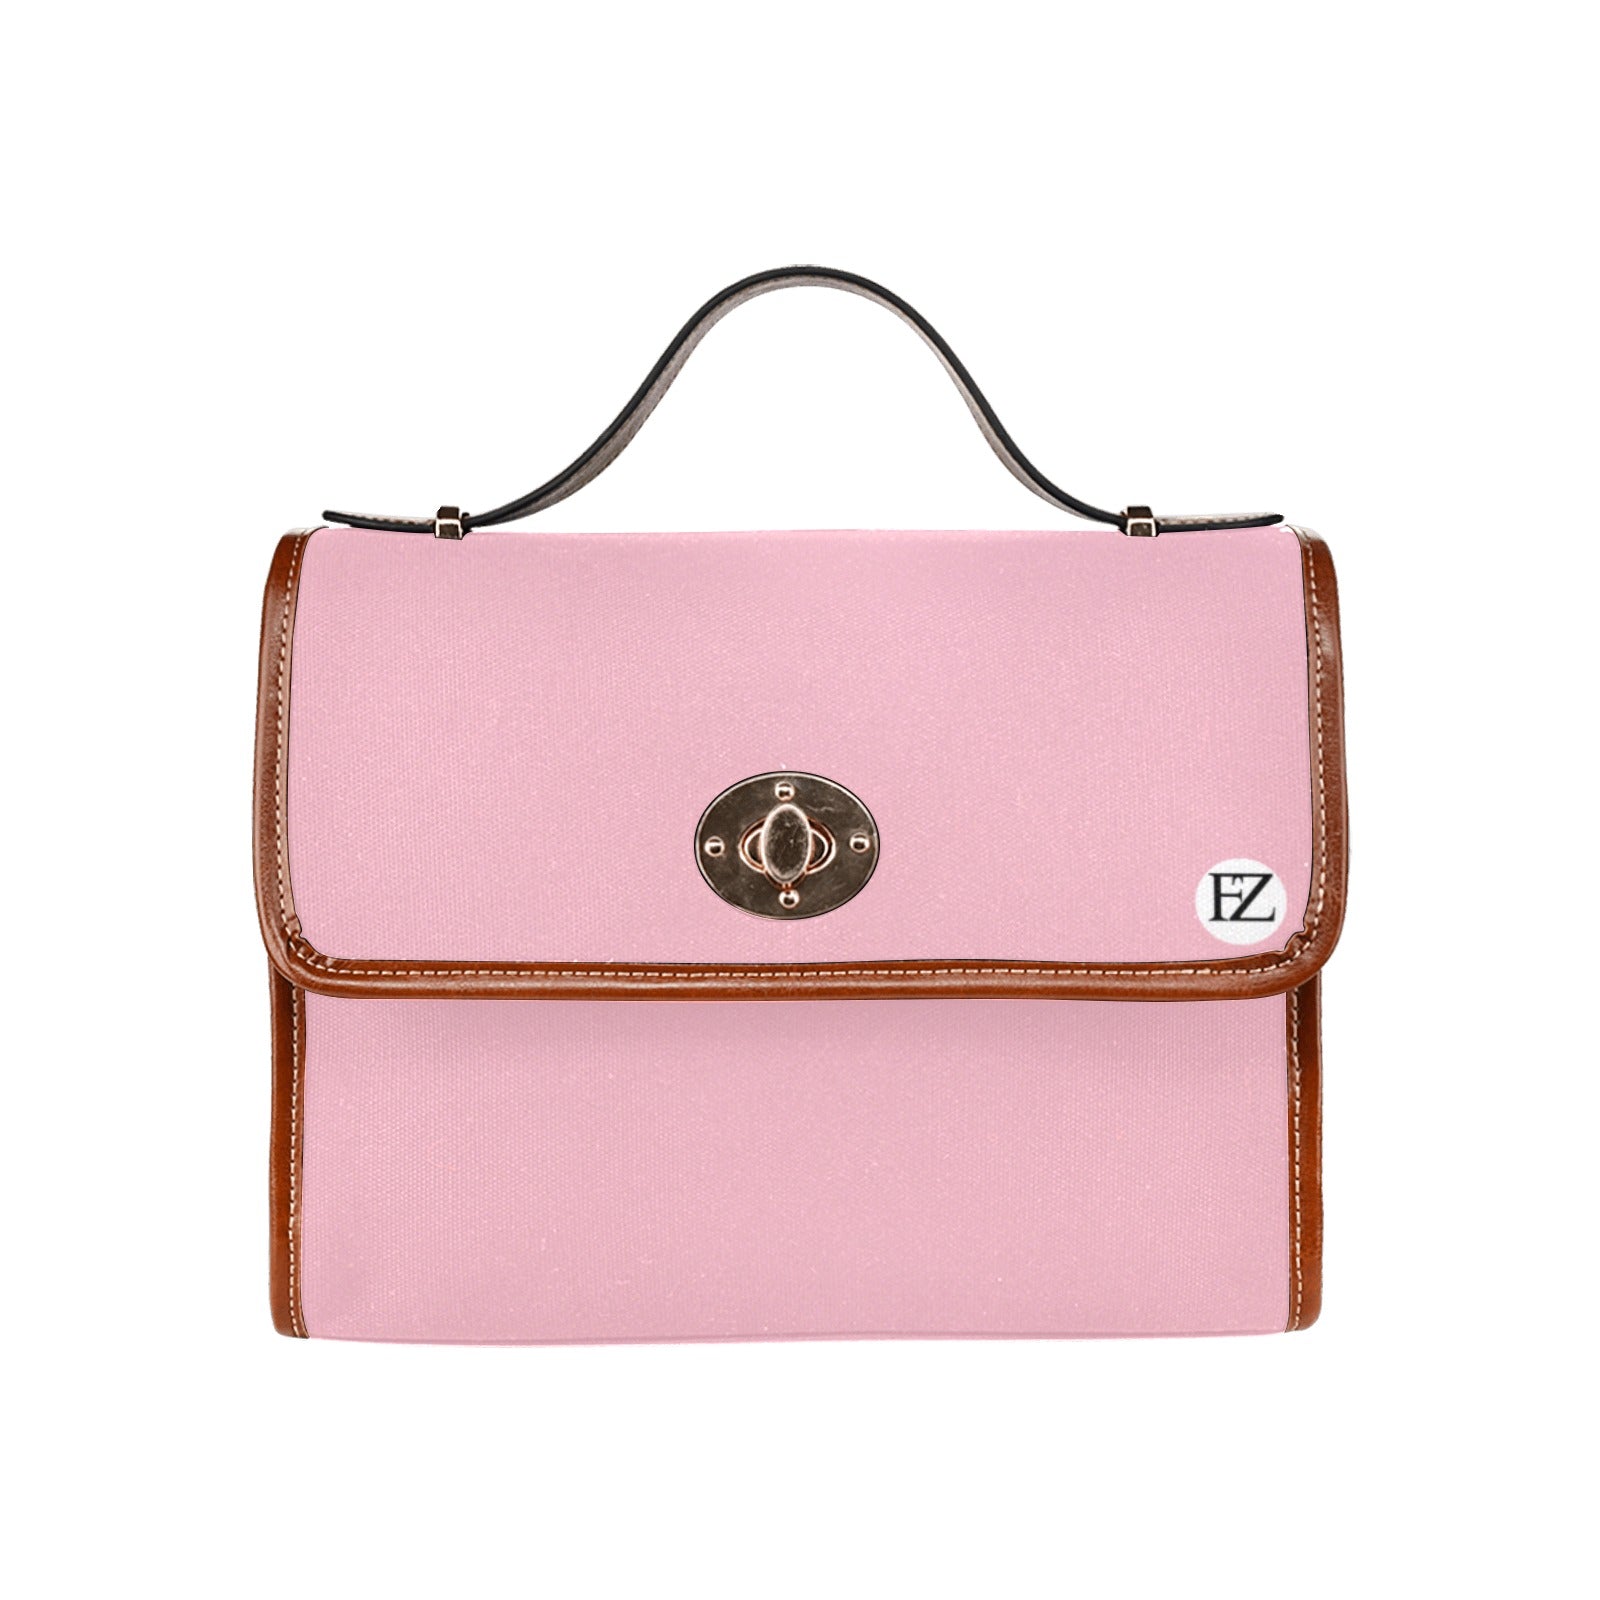 fz original handbag one size / fz - pink all over print waterproof canvas bag(model1641)(brown strap)